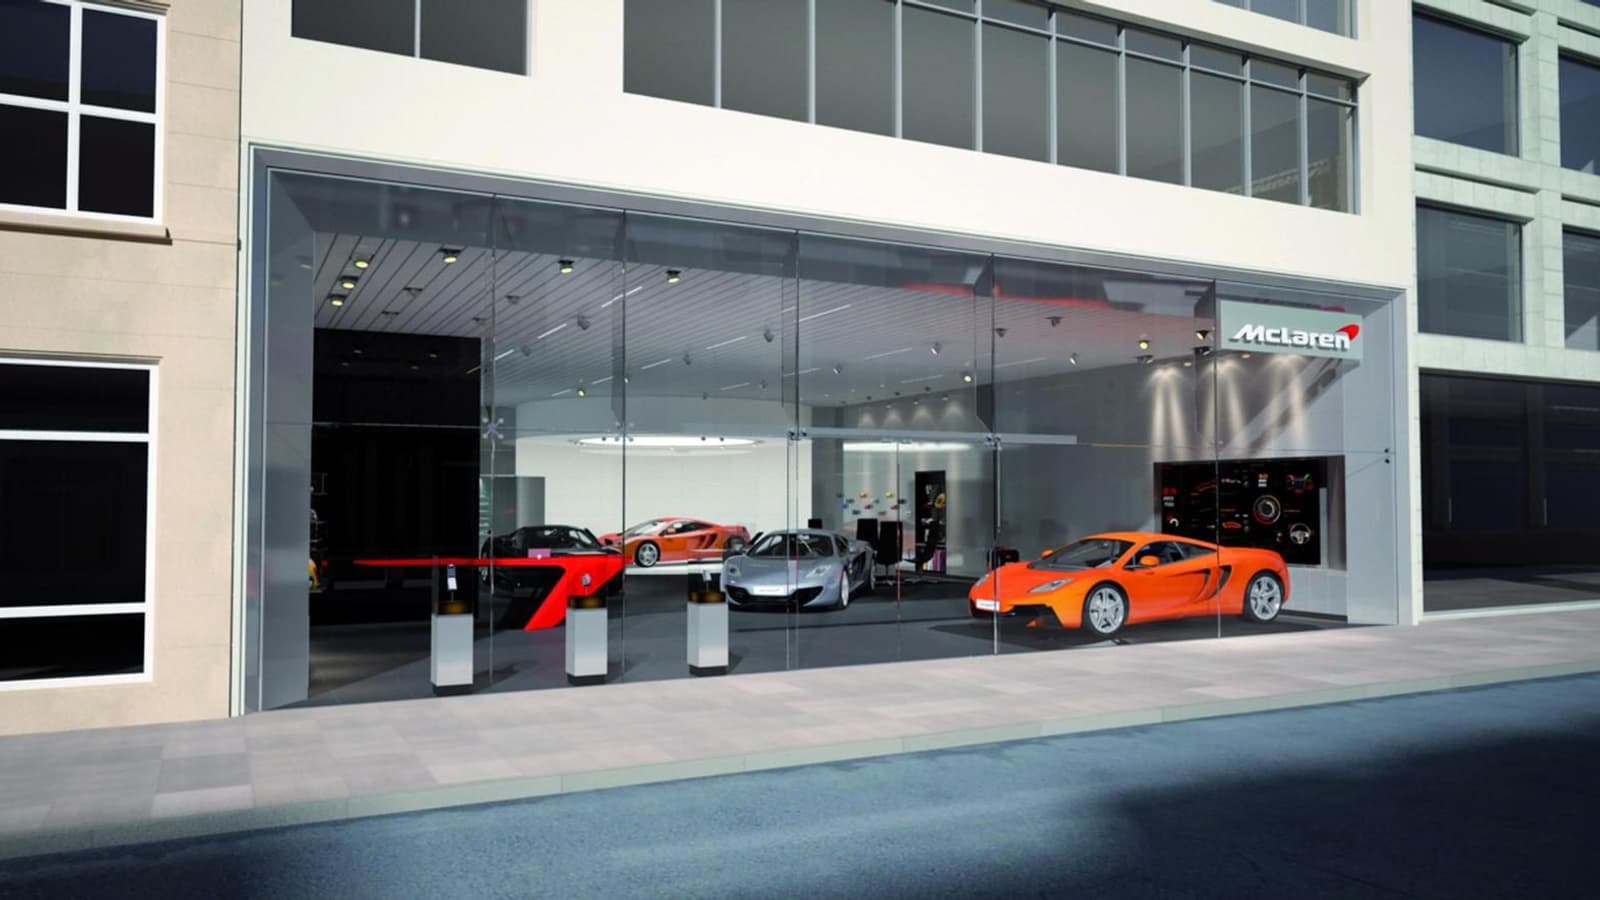 McLaren retail environment concept rendering